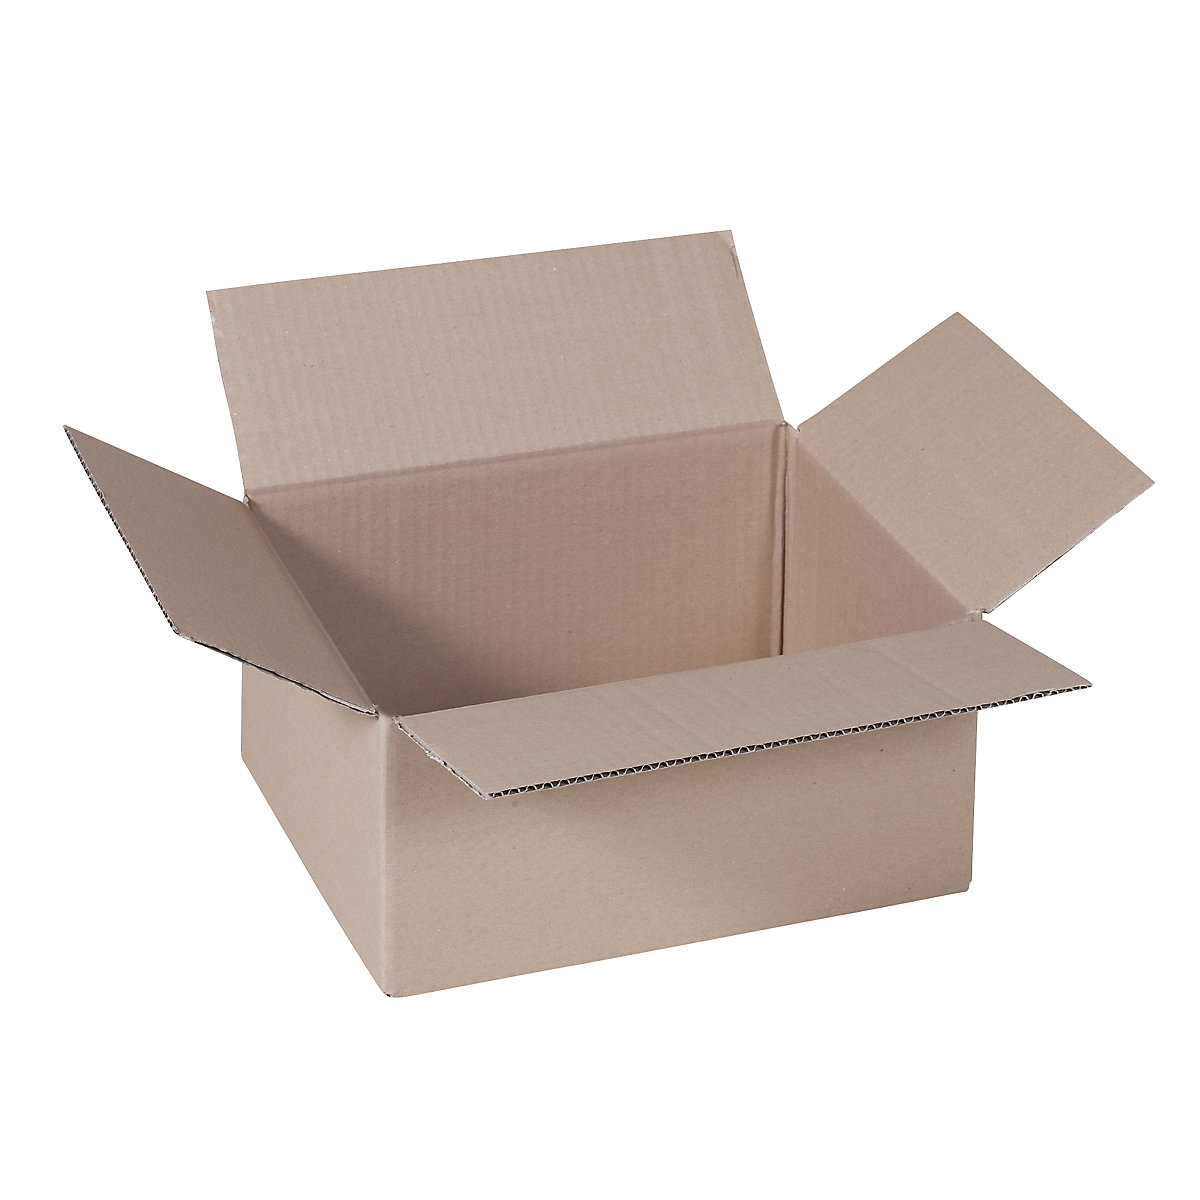 Folding cardboard box, FEFCO 0201, made of single fluted cardboard, internal dimensions 400 x 300 x 250 mm, pack of 100-11